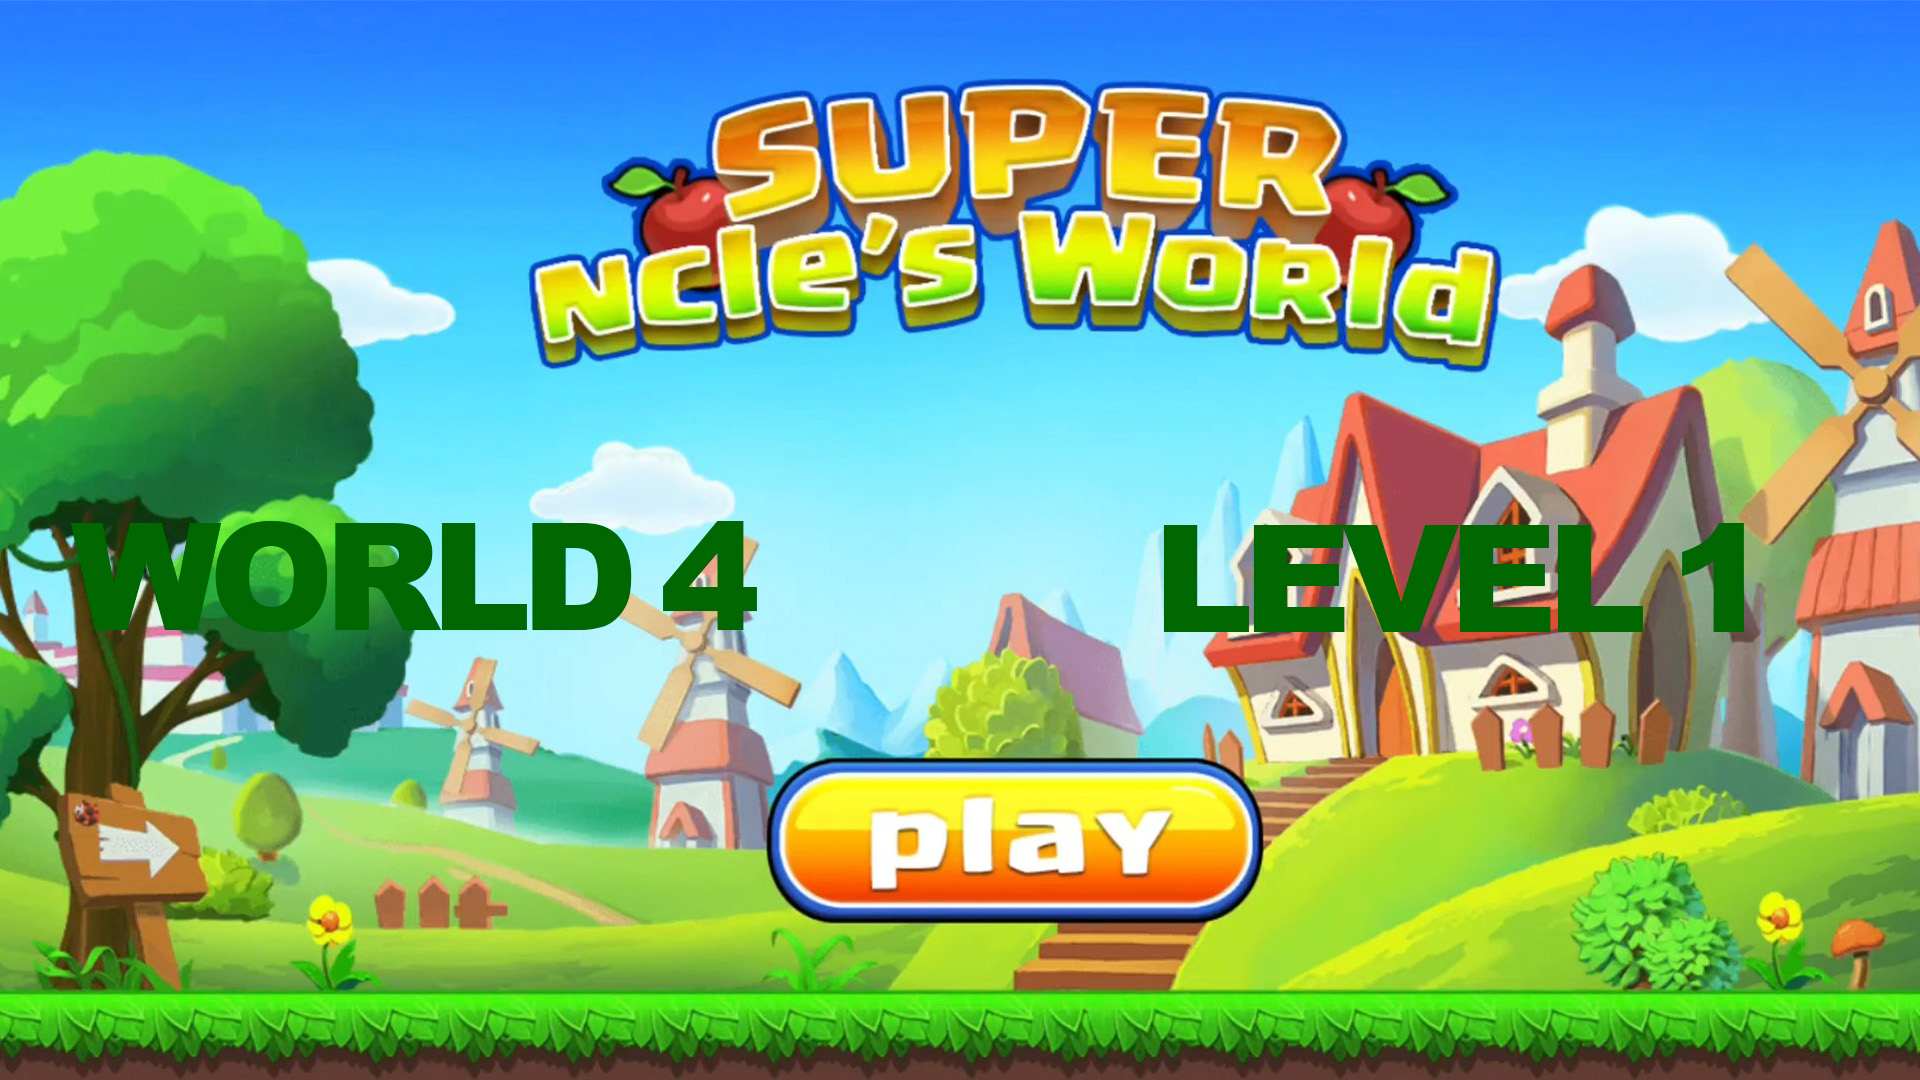 Super ncle's  World 4. Level 1.